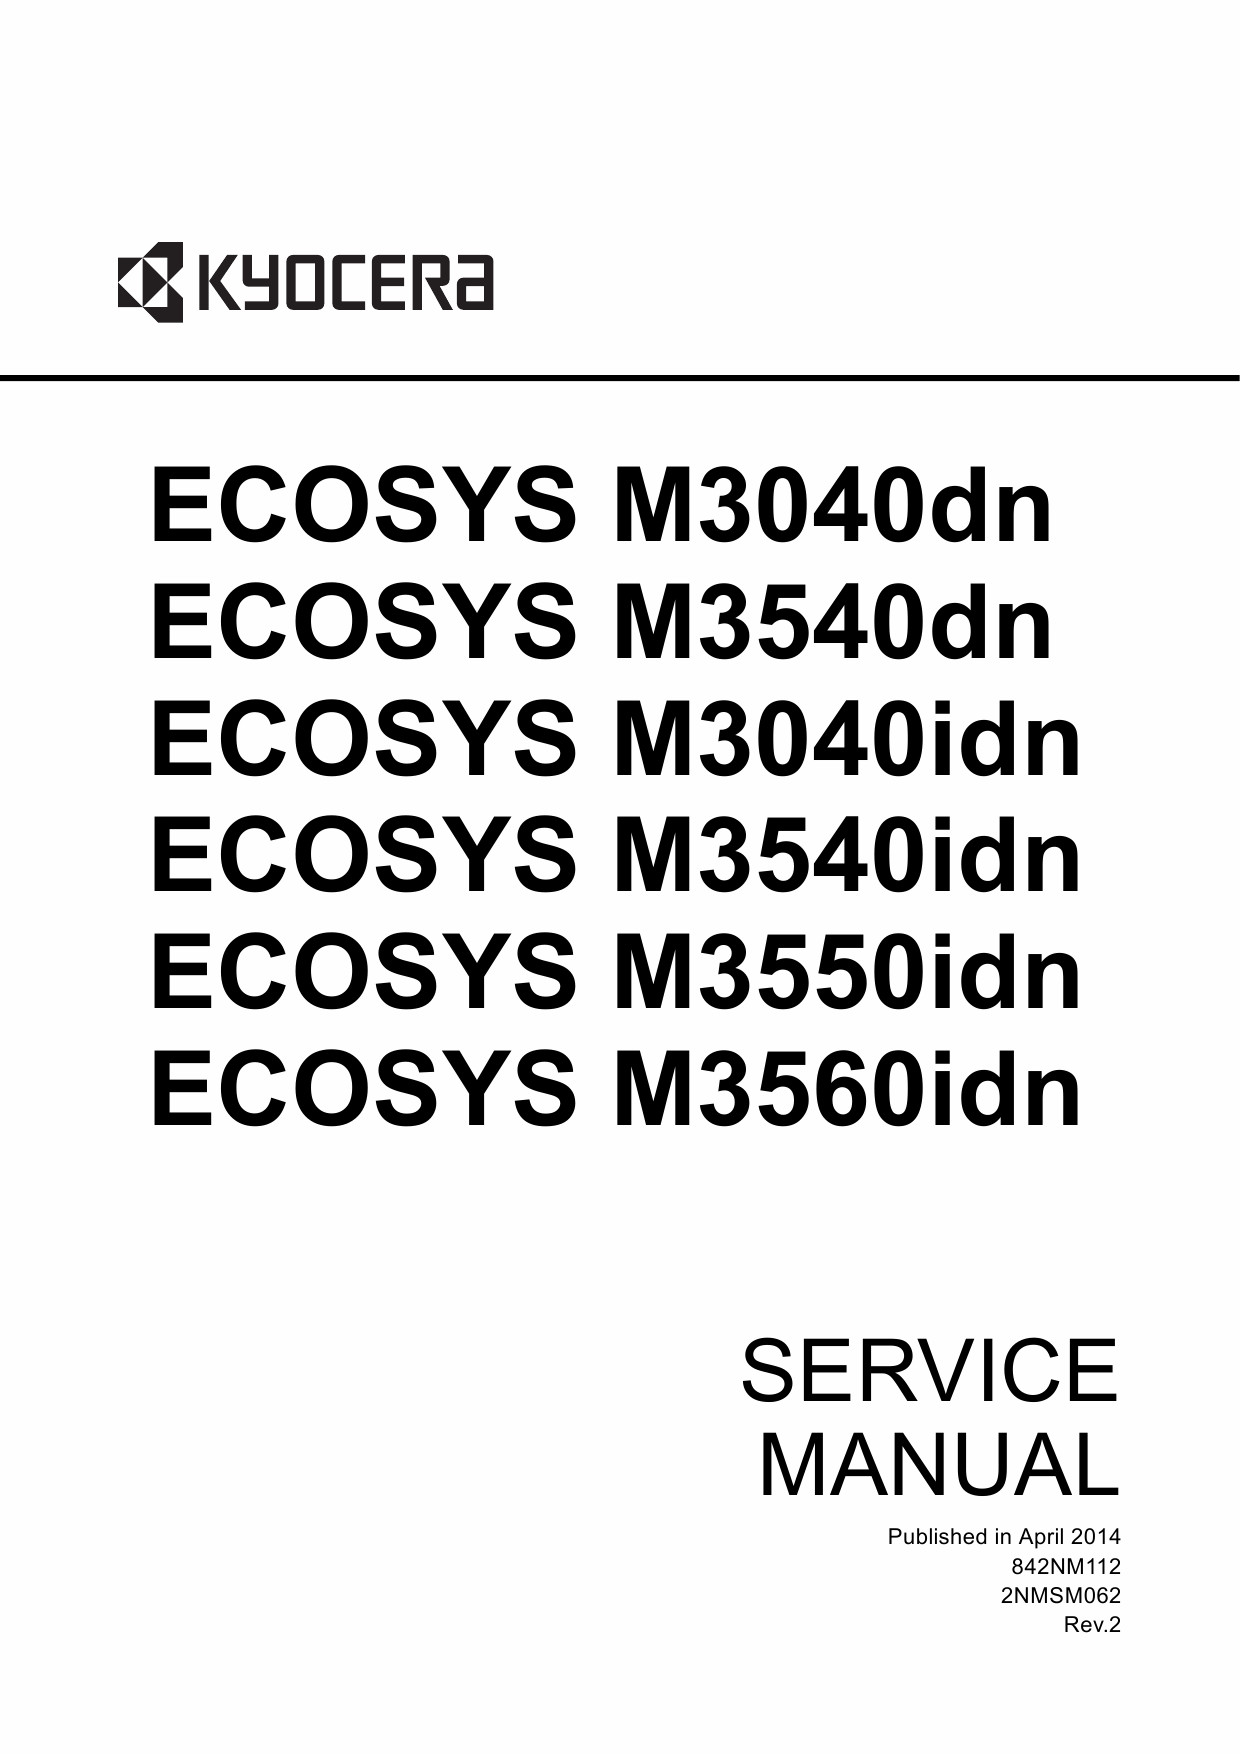 KYOCERA MFP ECOSYS-M3040dn M3540dn M3550idn M3560idn Service Manual-1